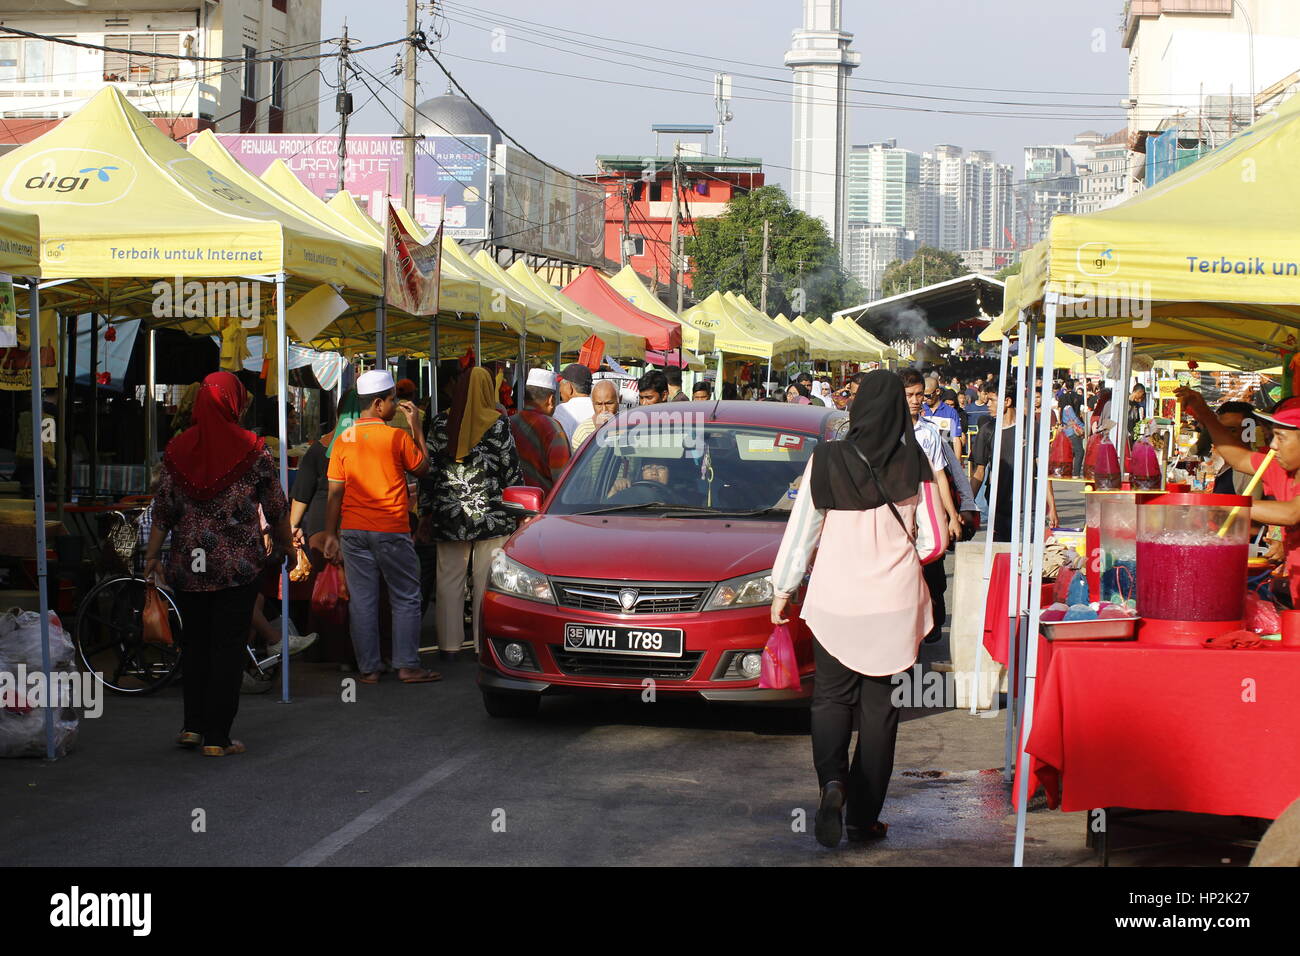 Il Ramadan bazaar a Kampung Baru, Kuala Lumpur, Malesia. Chioschi che servono i musulmani per la rottura rapida. Foto Stock